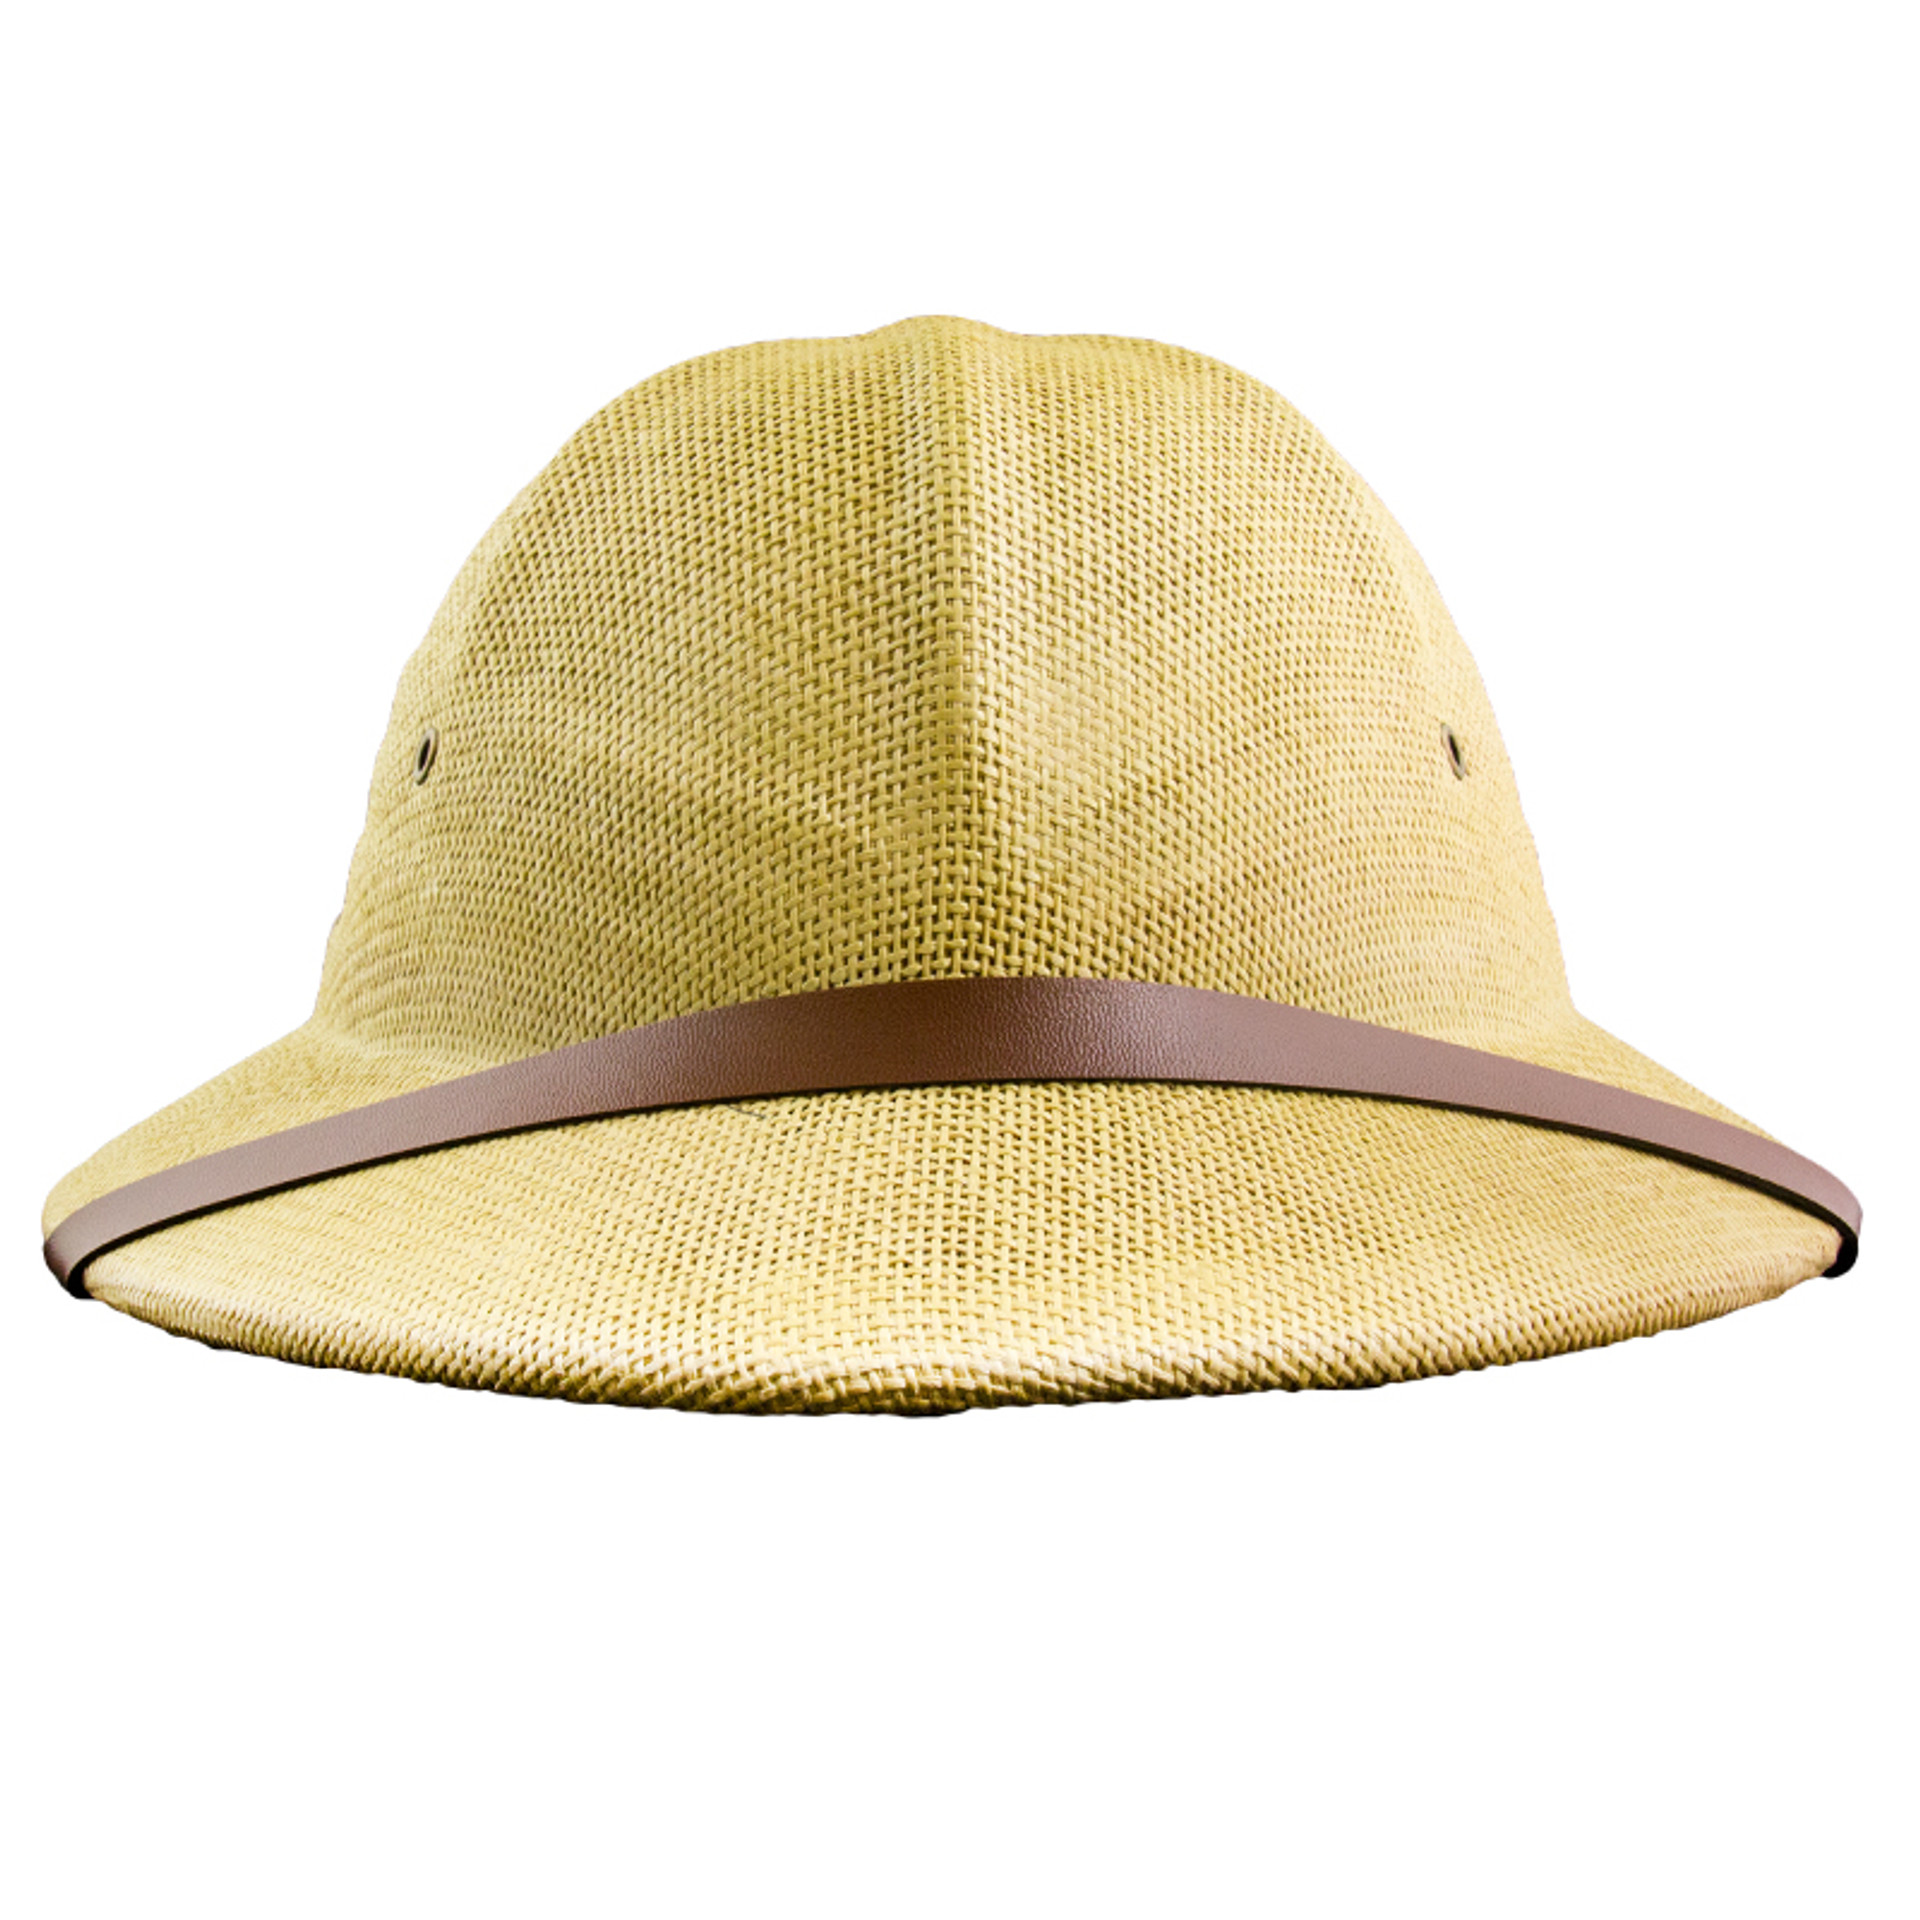 Deluxe Safari Pith Hat 1428 - Private Island Party